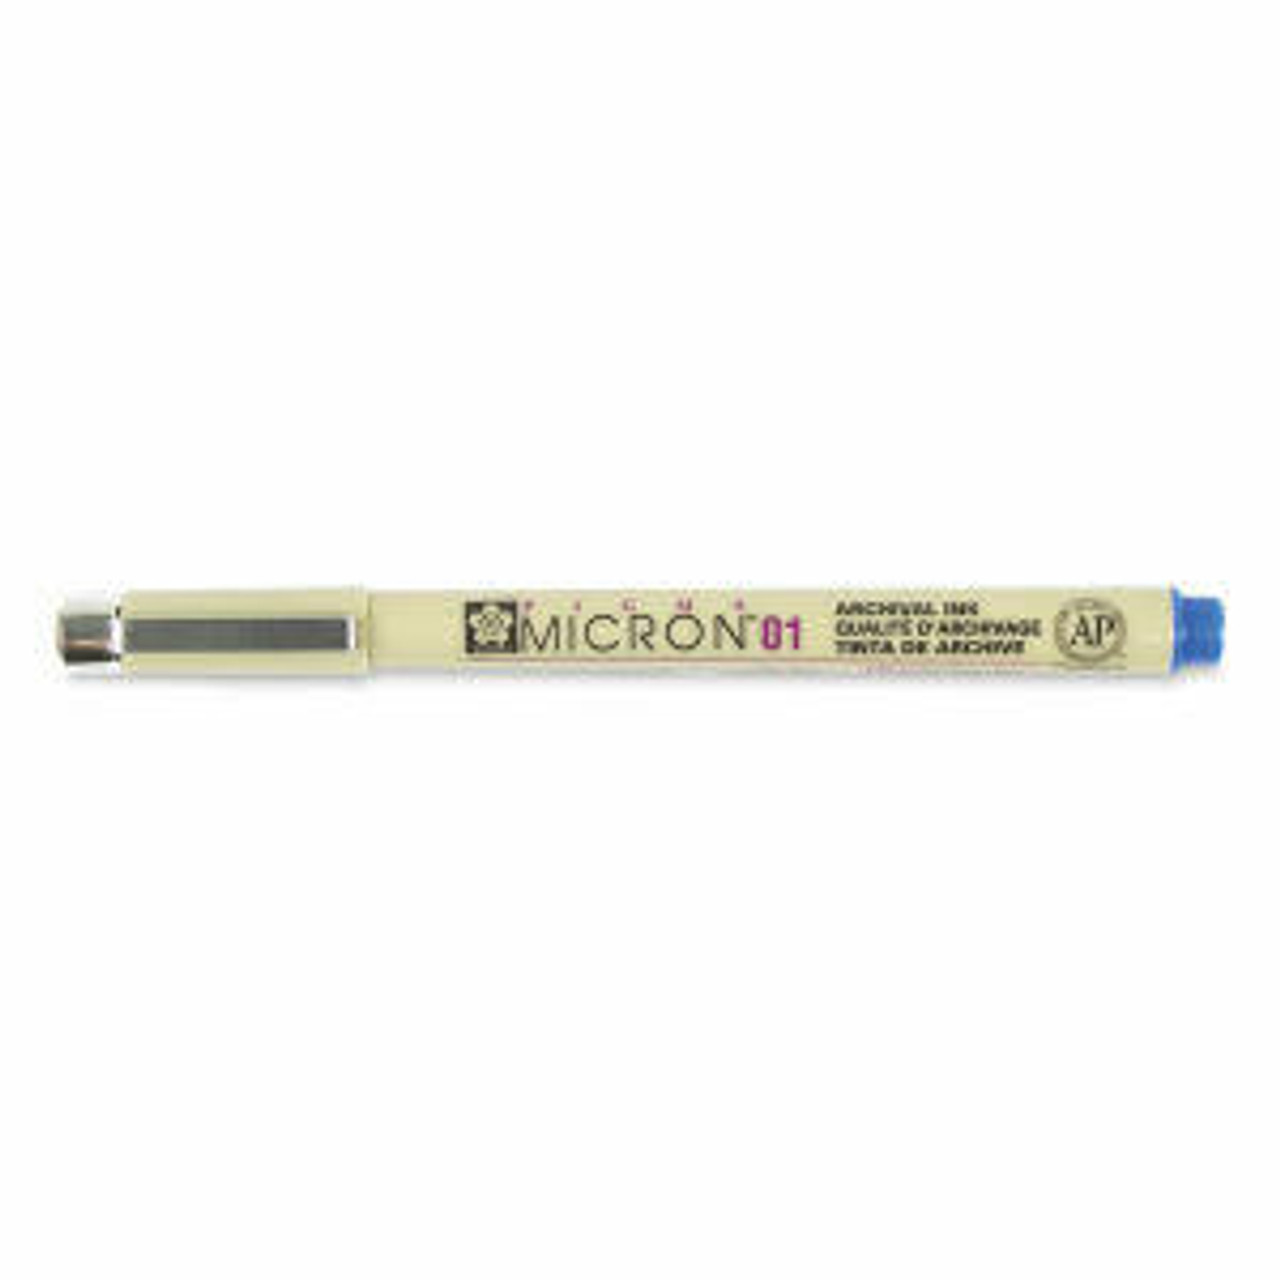 Archival Pigma Pen (Micron Pen)